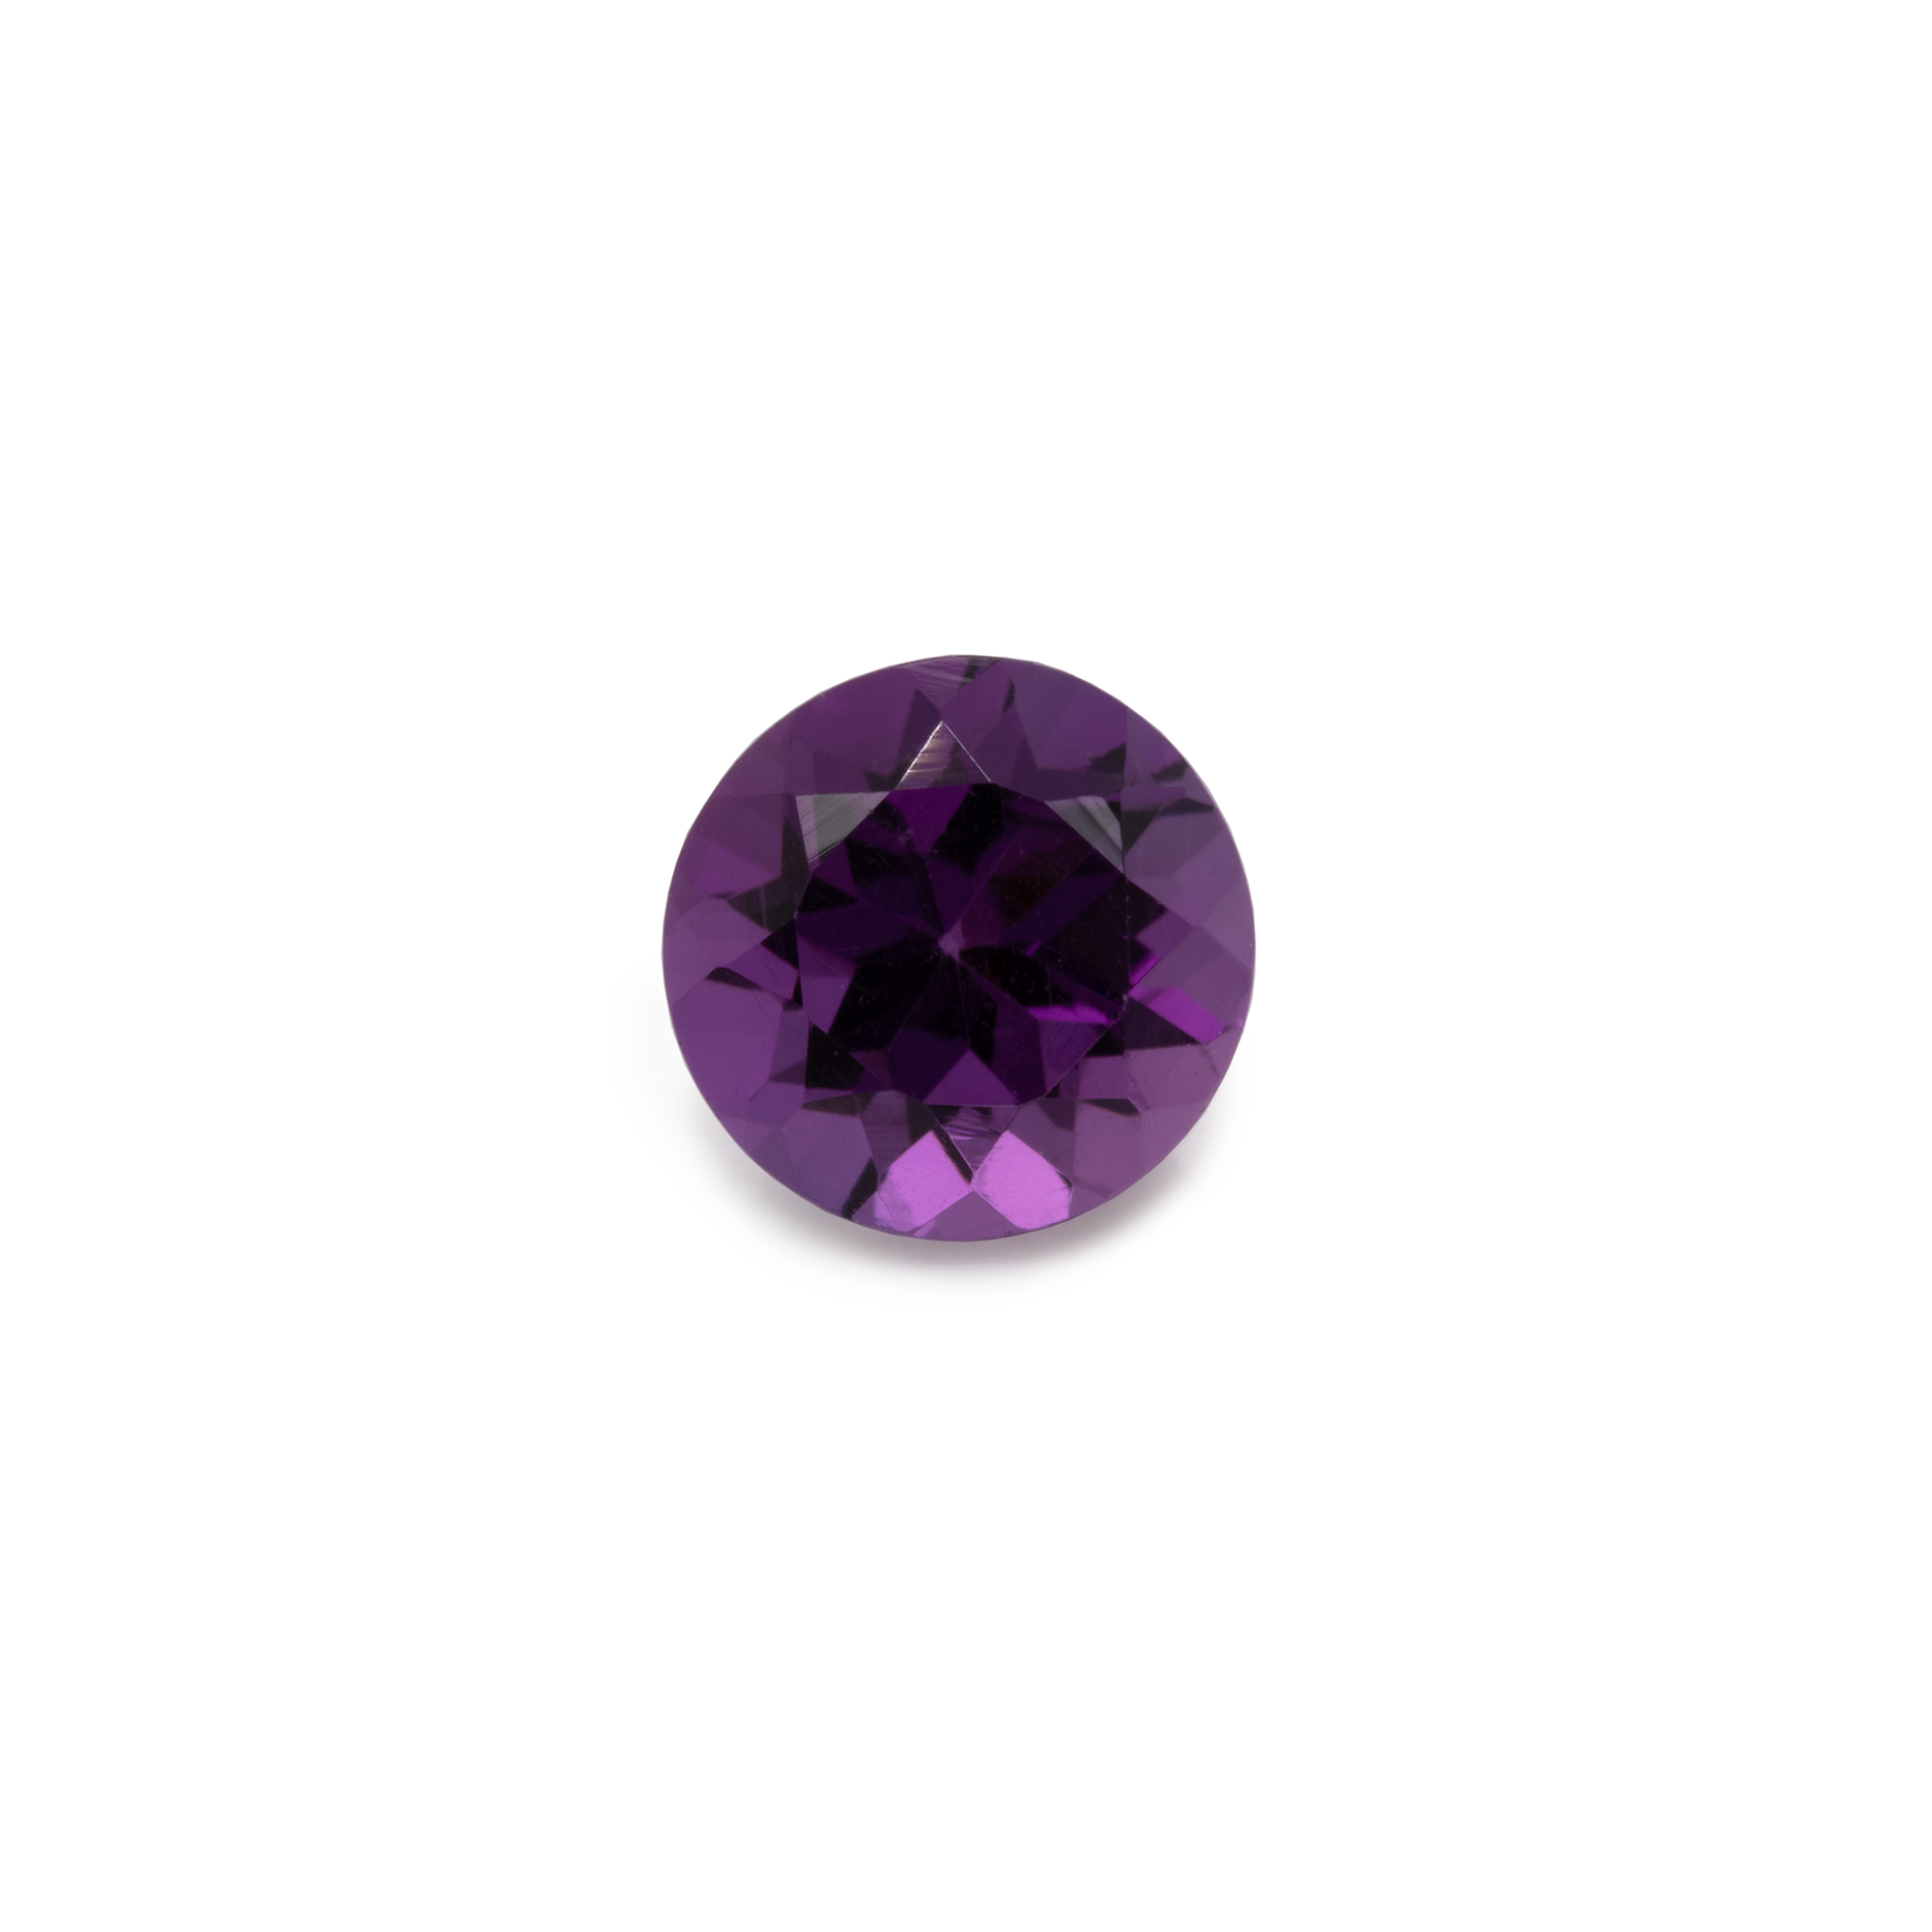 Amethyst - purple, round, 6x6 mm, 0.84-0.89 cts, No. AMY40001